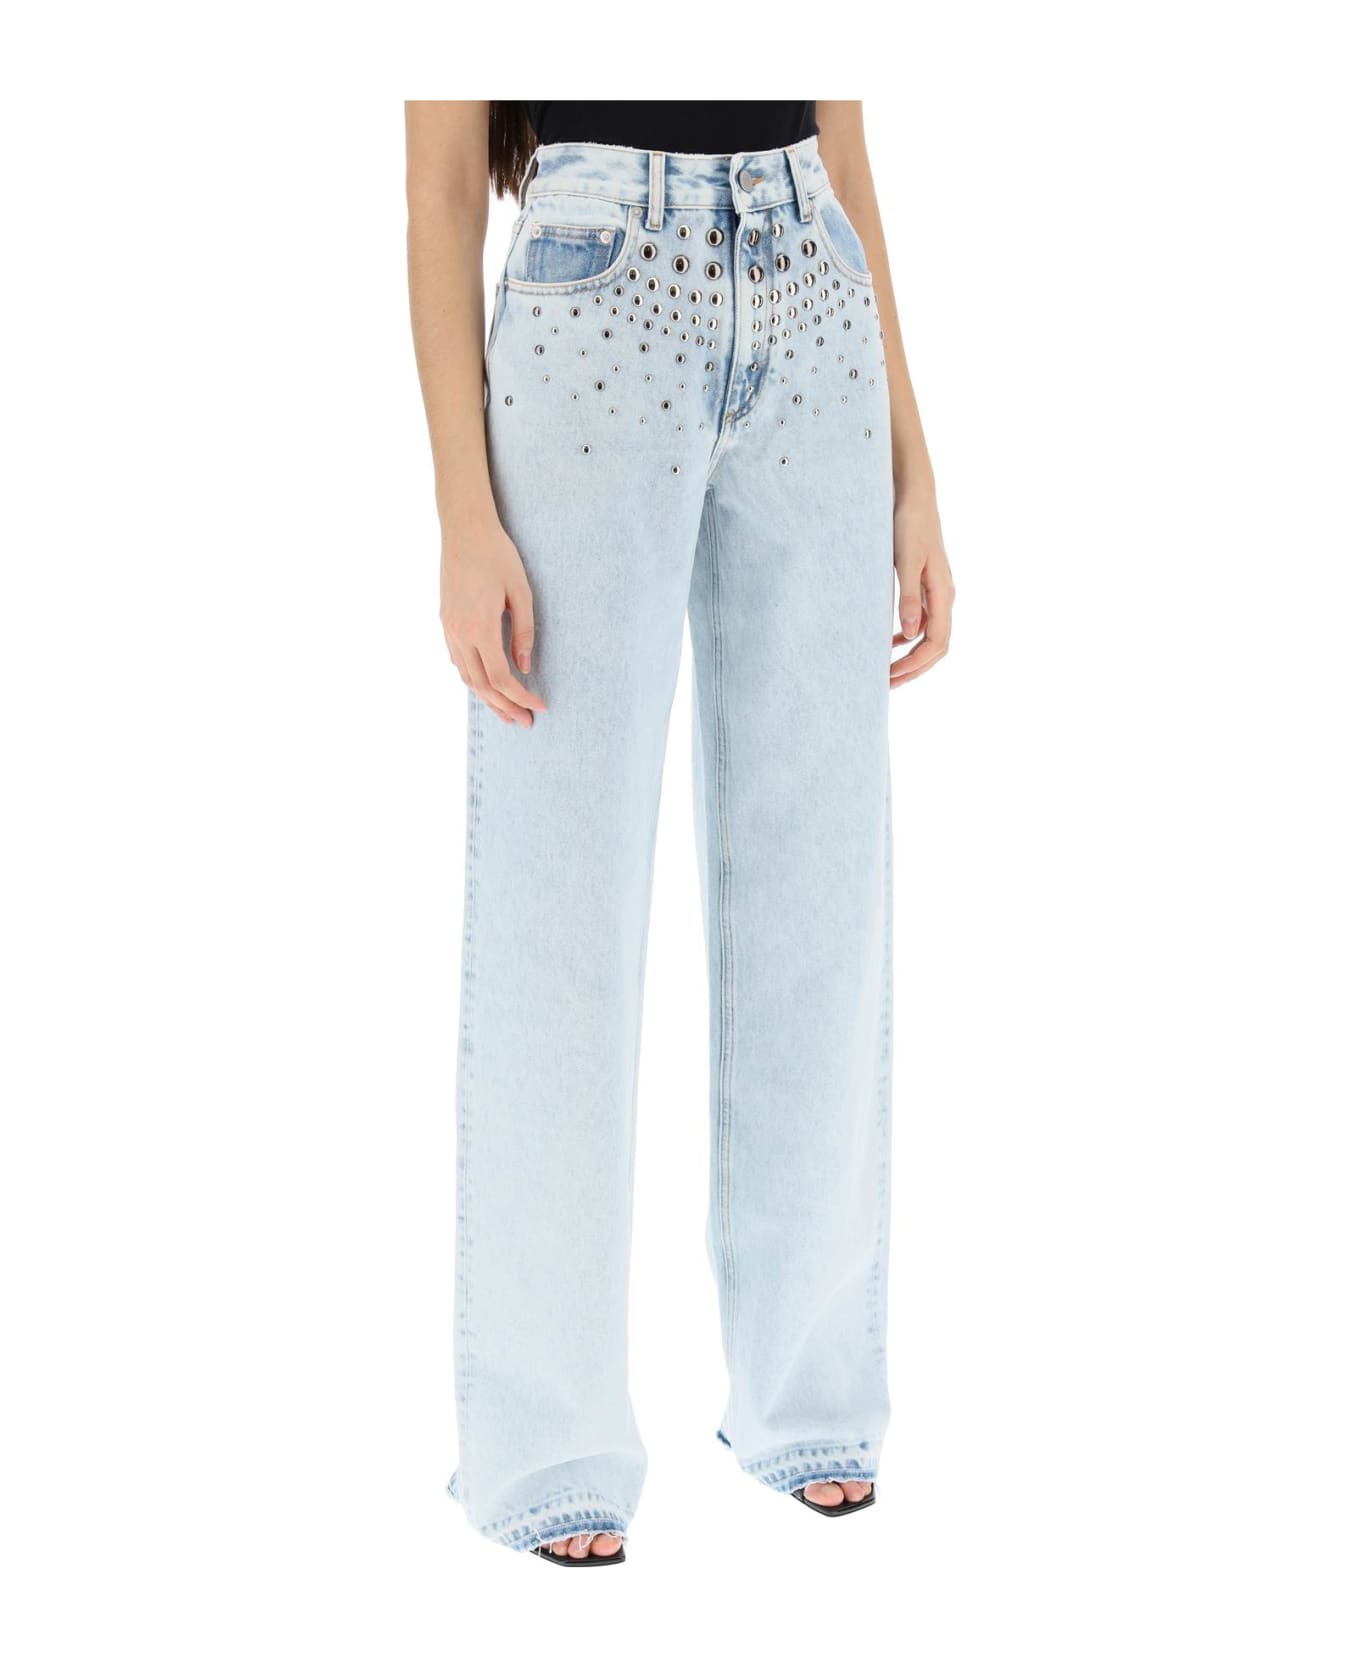 Alessandra Rich Jeans With Studs - LIGHT BLUE (Light blue) デニム